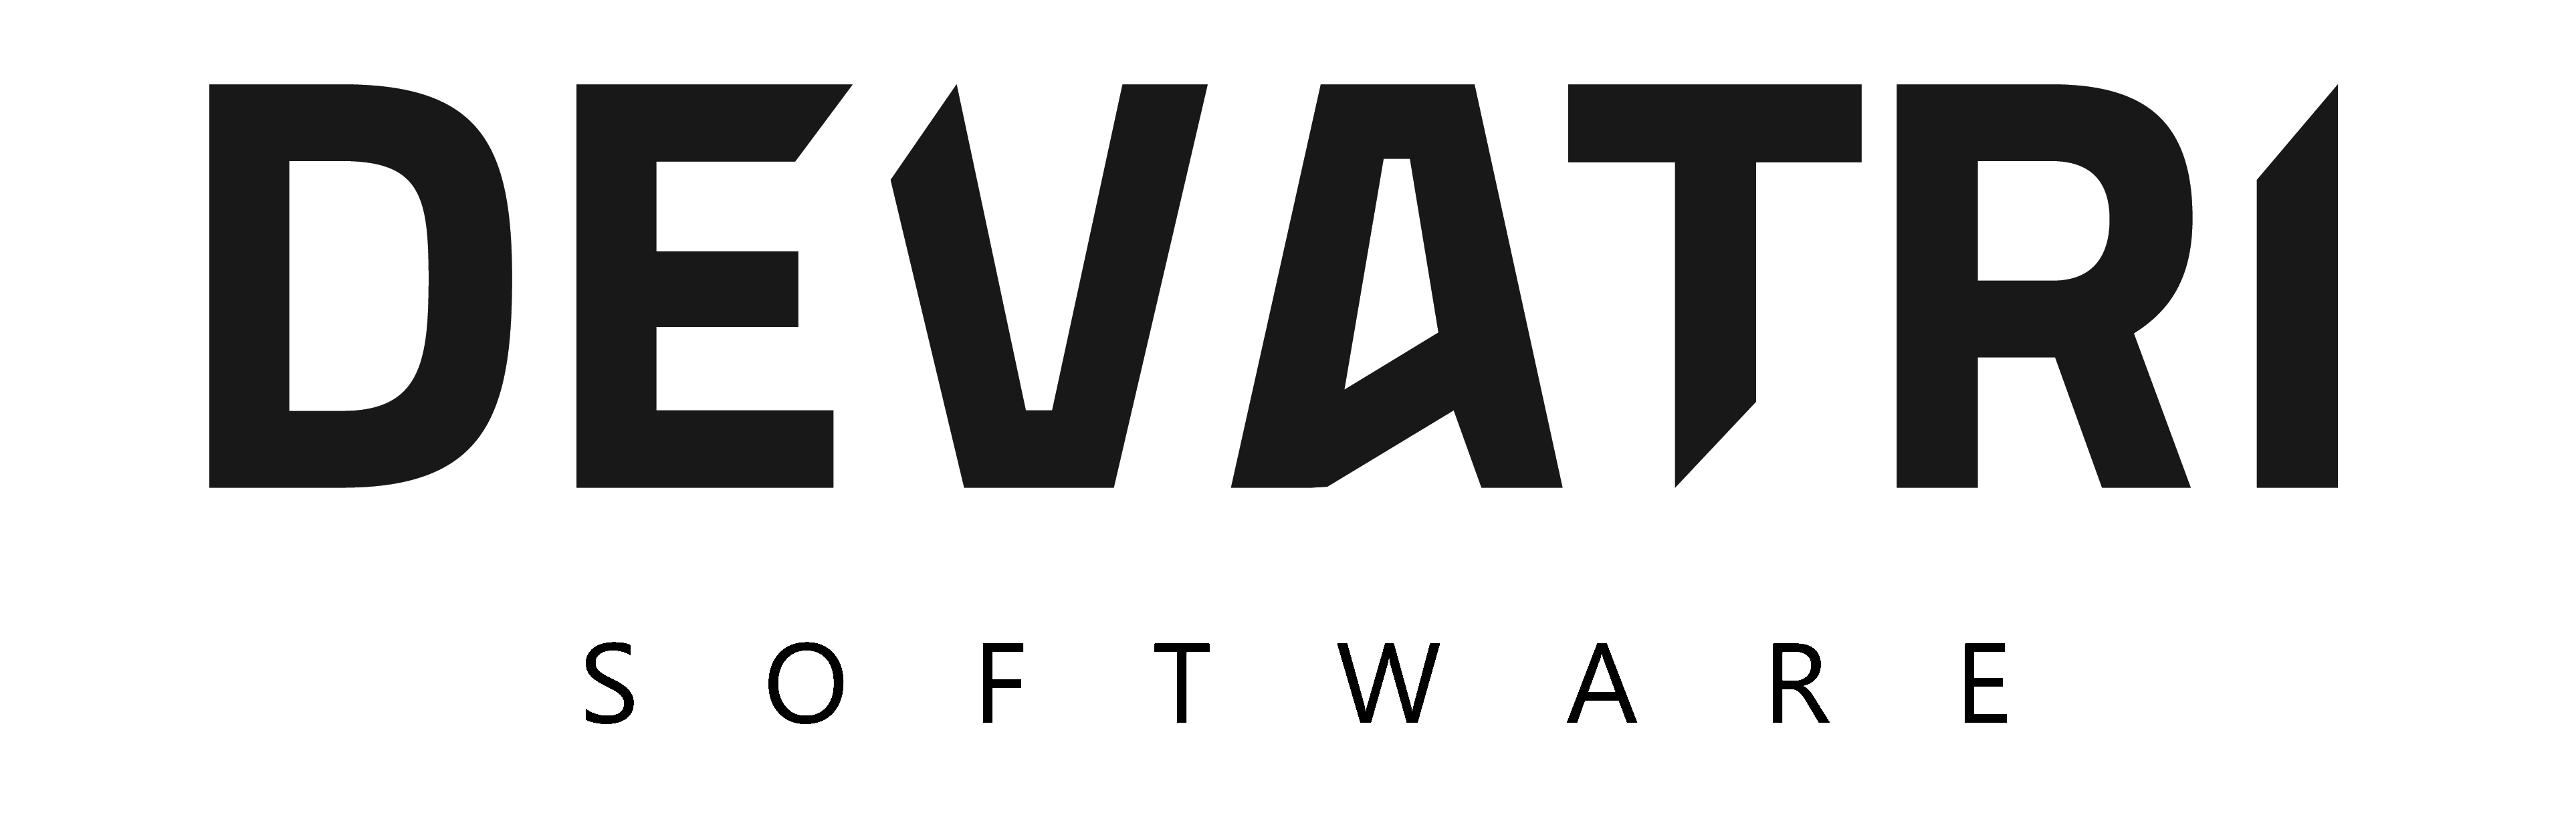 devatri logo brand